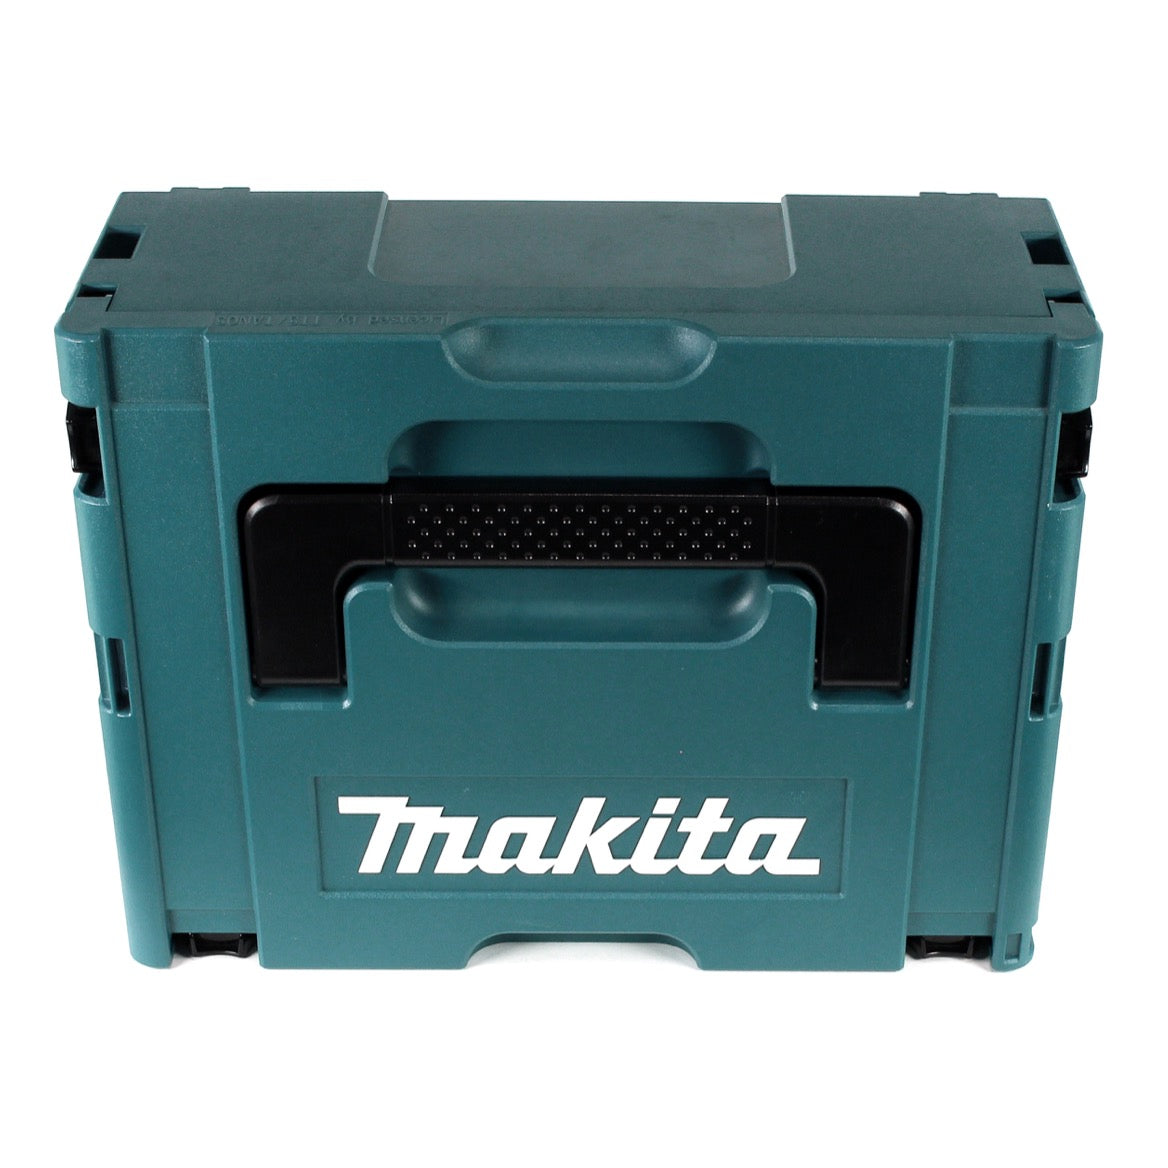 Makita DDF 485 ZJ Akku Bohrschrauber 18 V 50 Nm Brushless + Makpac - ohne Akku, ohne Ladegerät - Toolbrothers